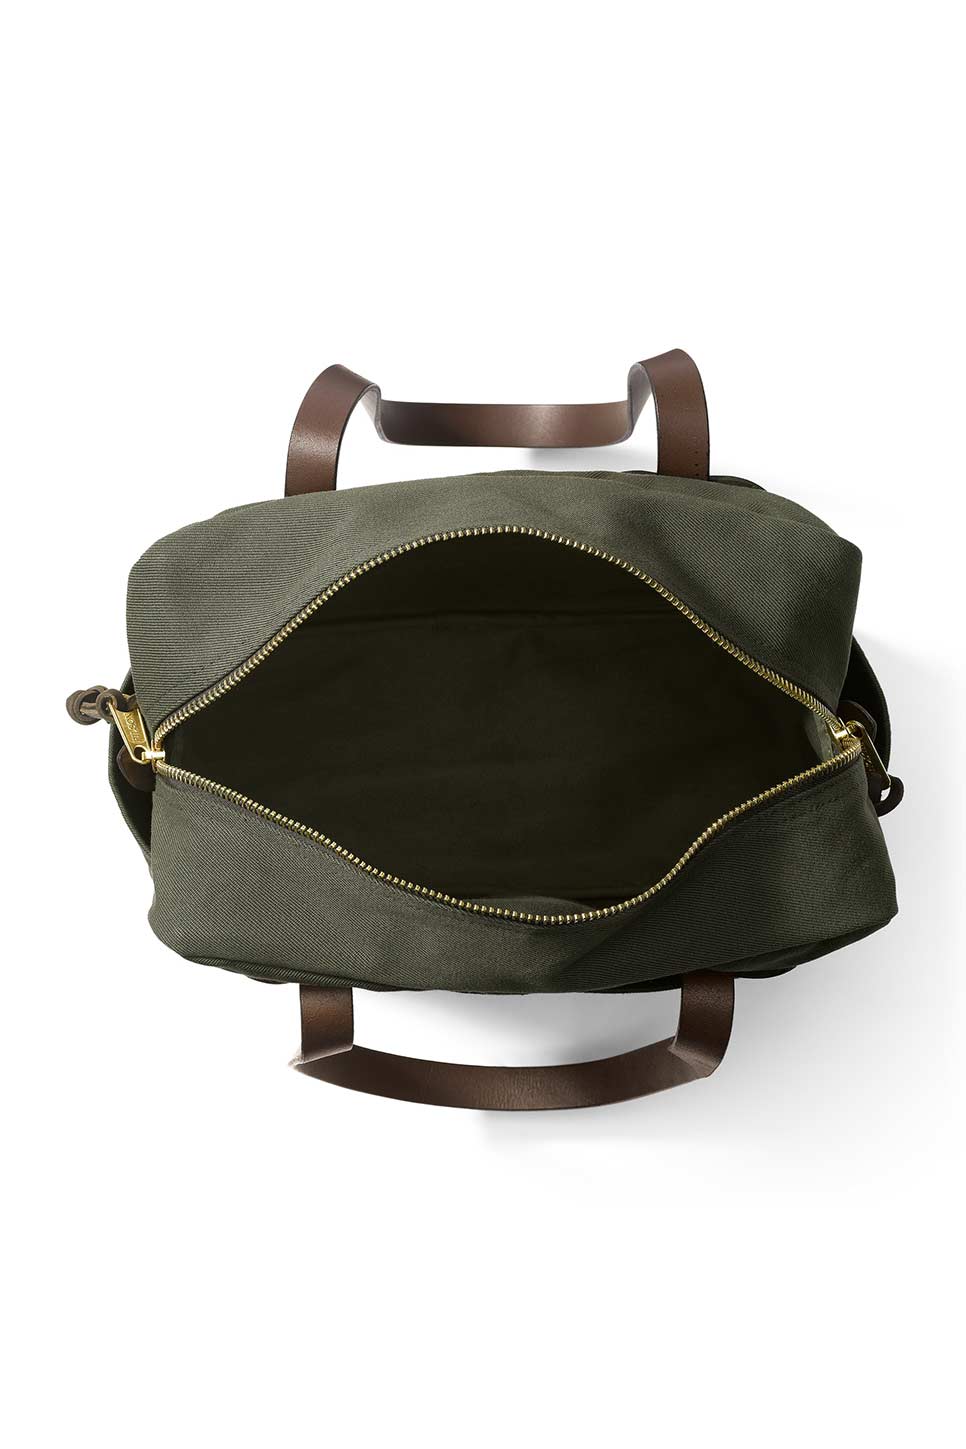 Filson - Tote Bag with Zipper - Otter Green - Inside